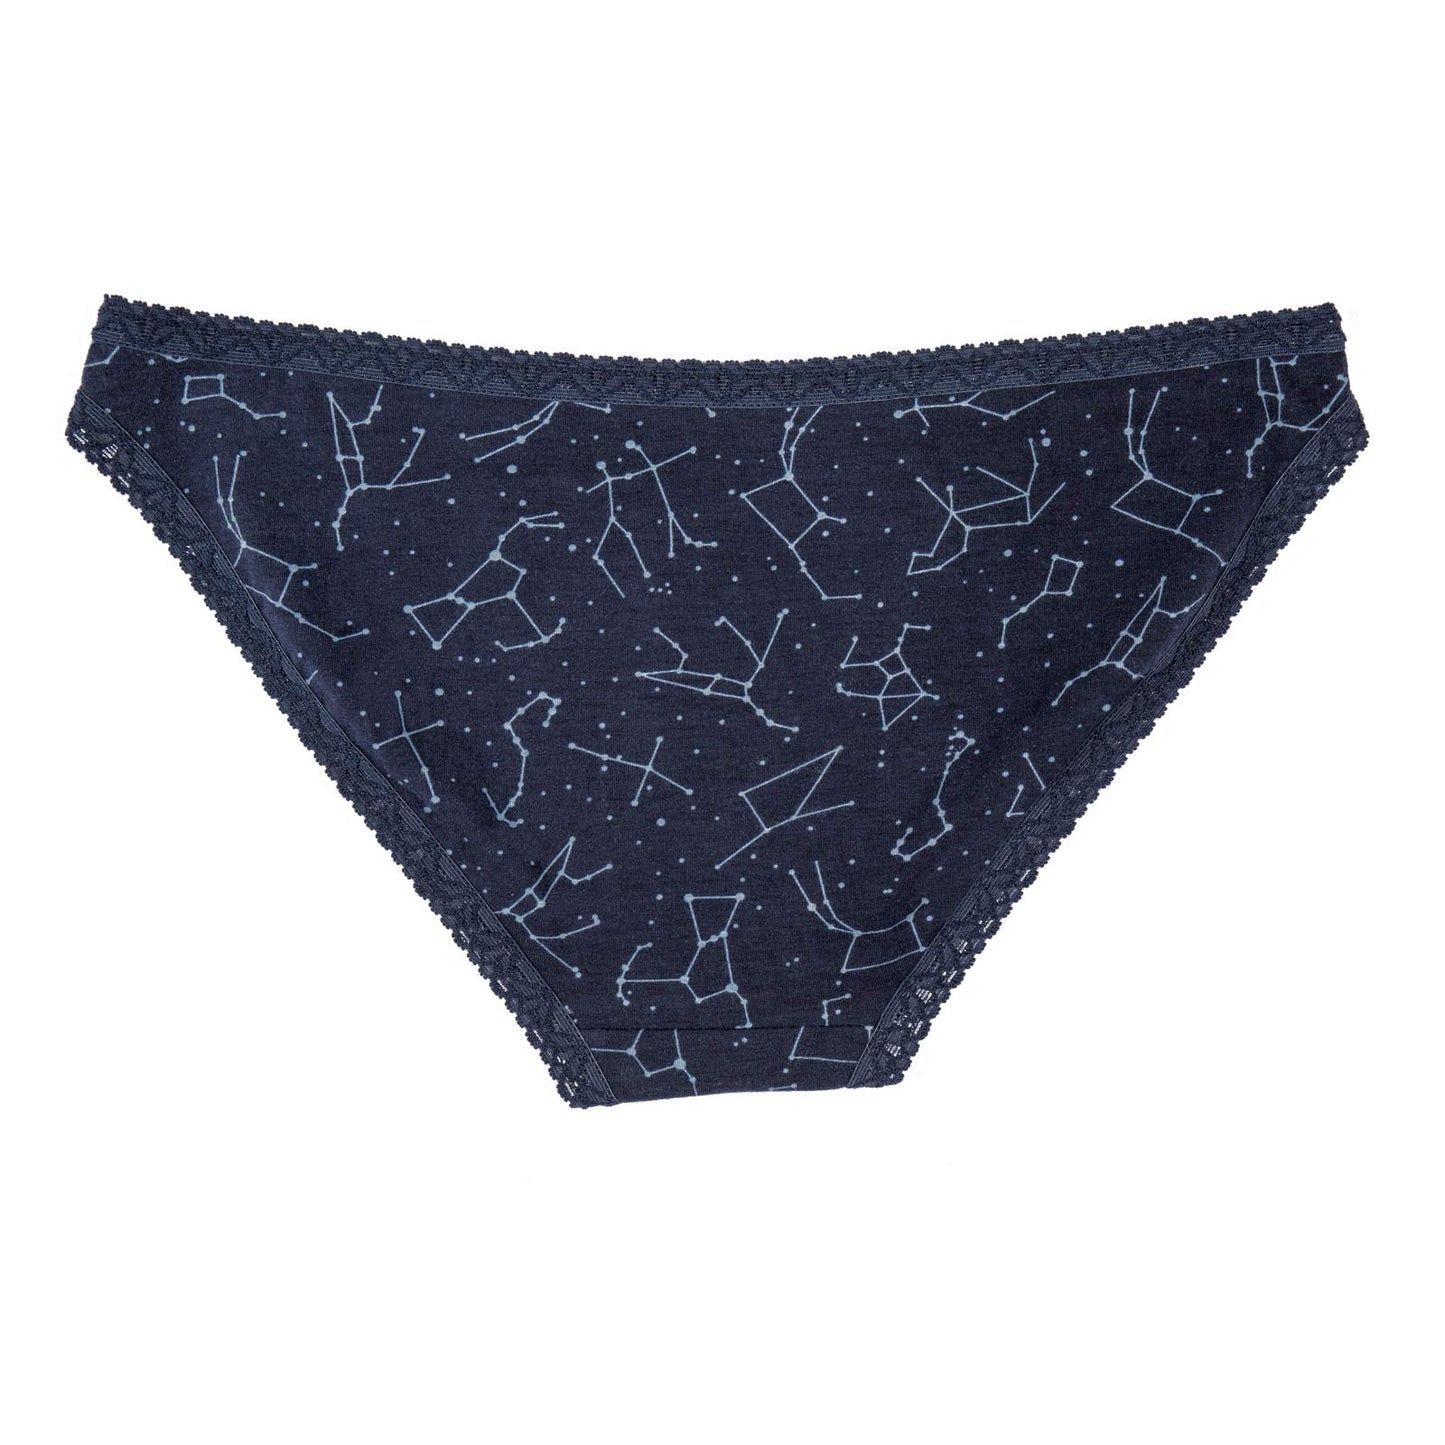 Sock It To Me Women's Underwear - Constellation - Medium